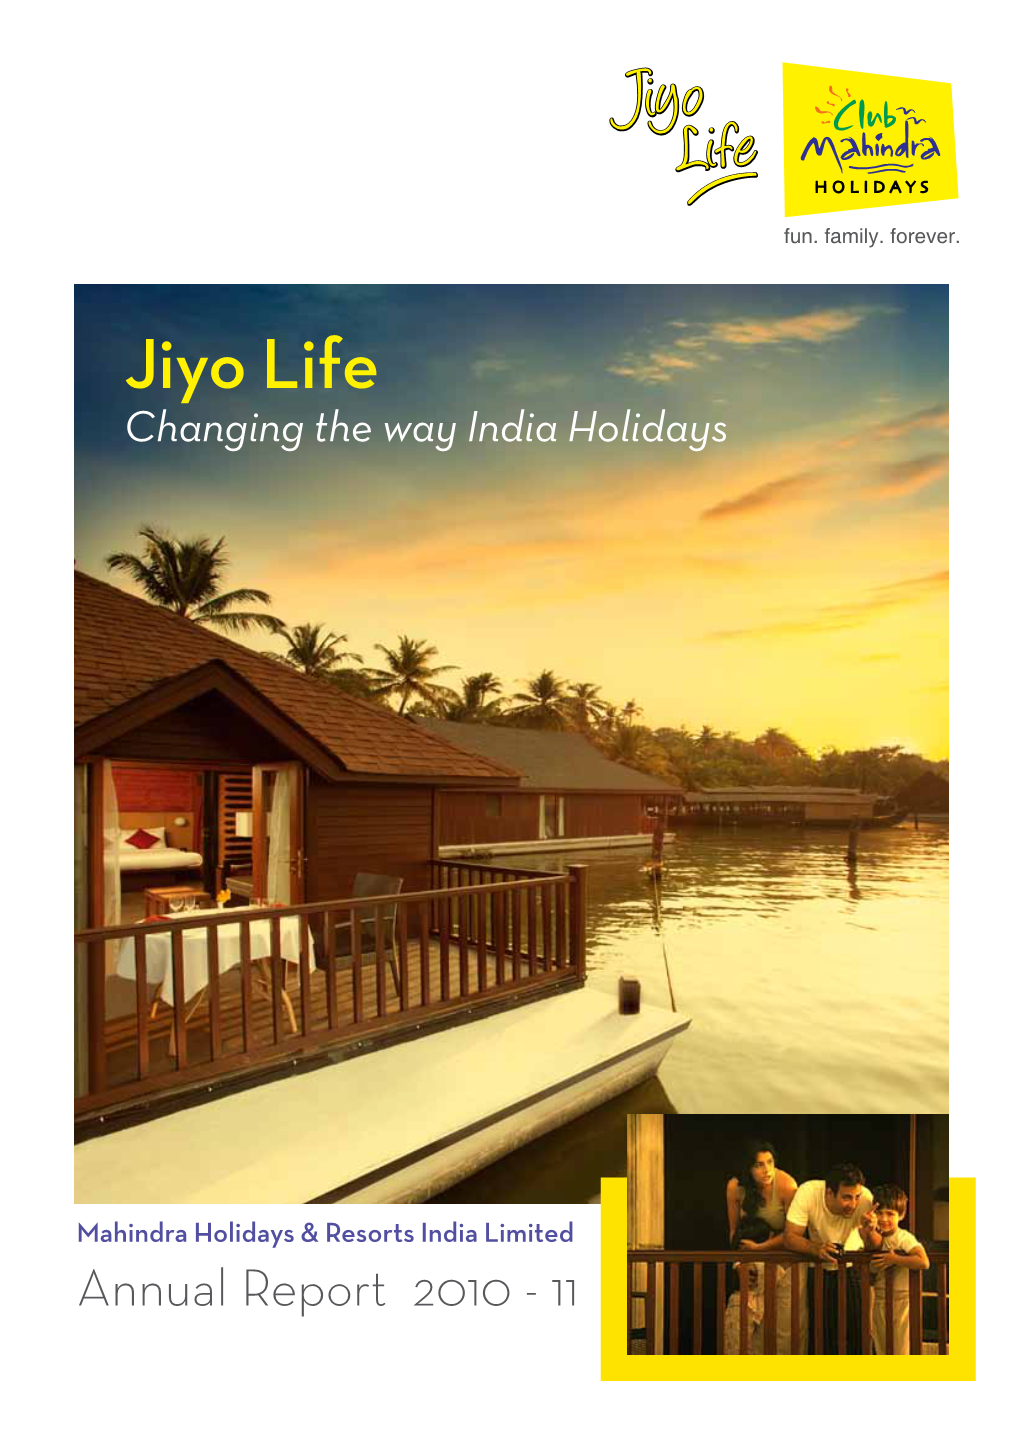 Jiyo Life Changing the Way India Holidays